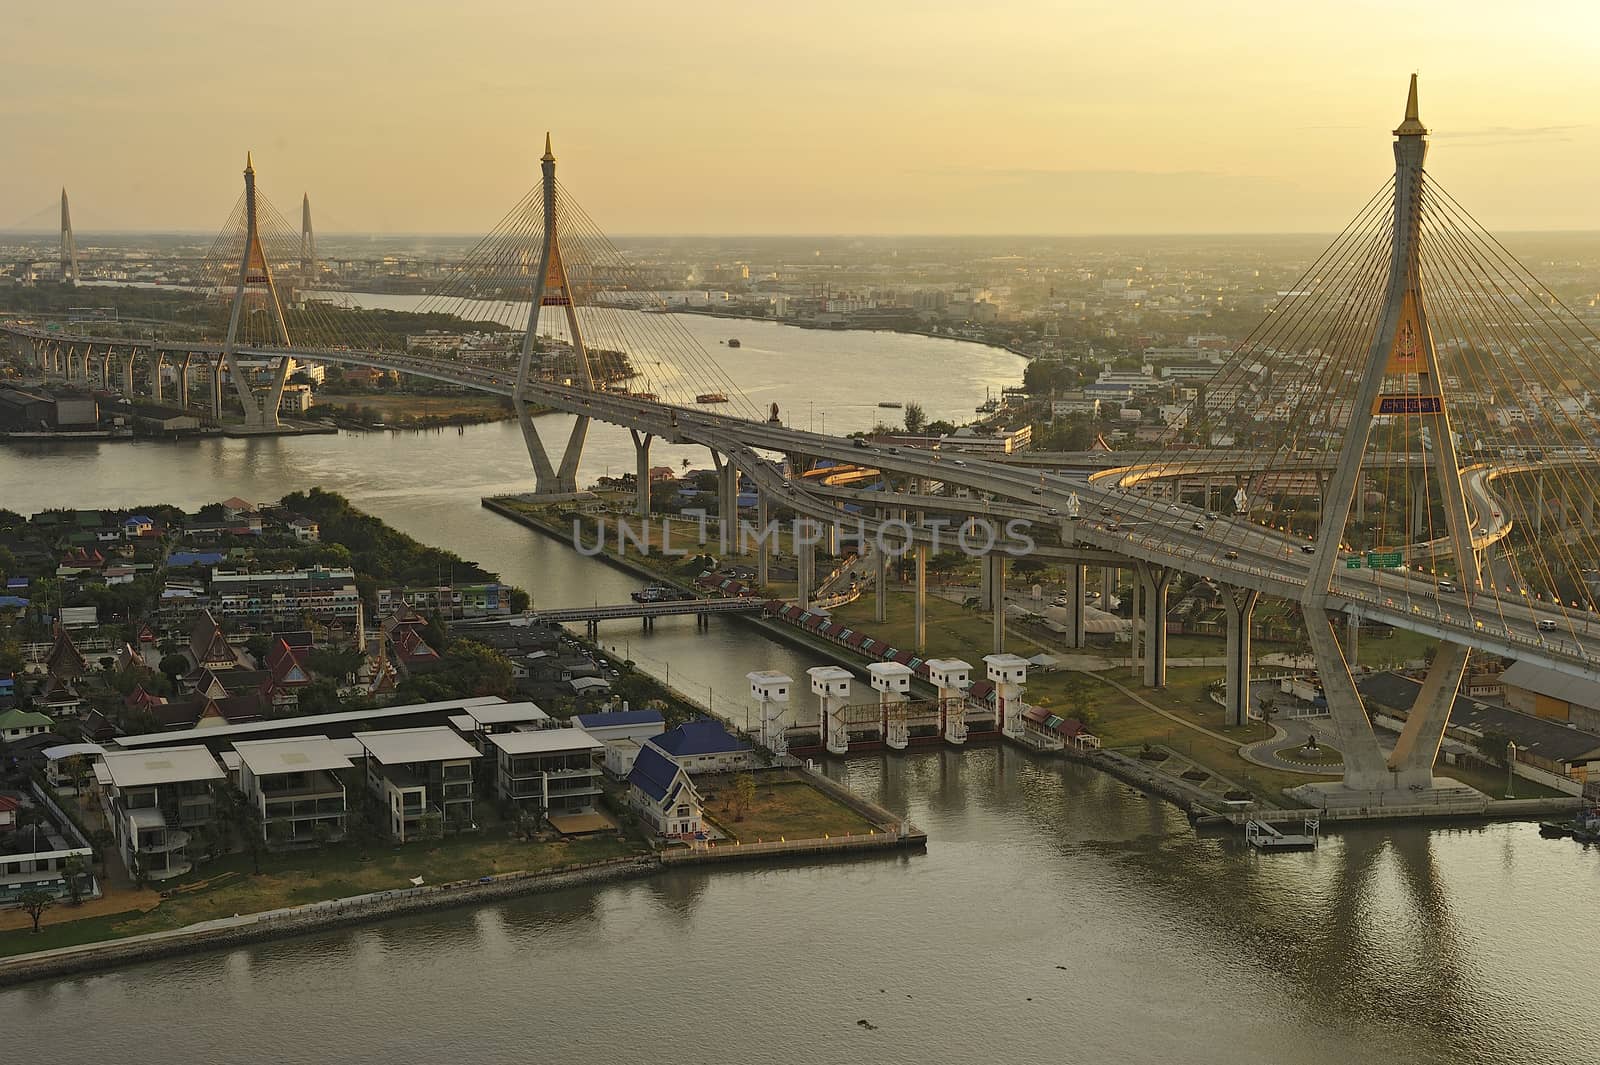 view of the Bhumibol bridge (Bangkok, Thailand)